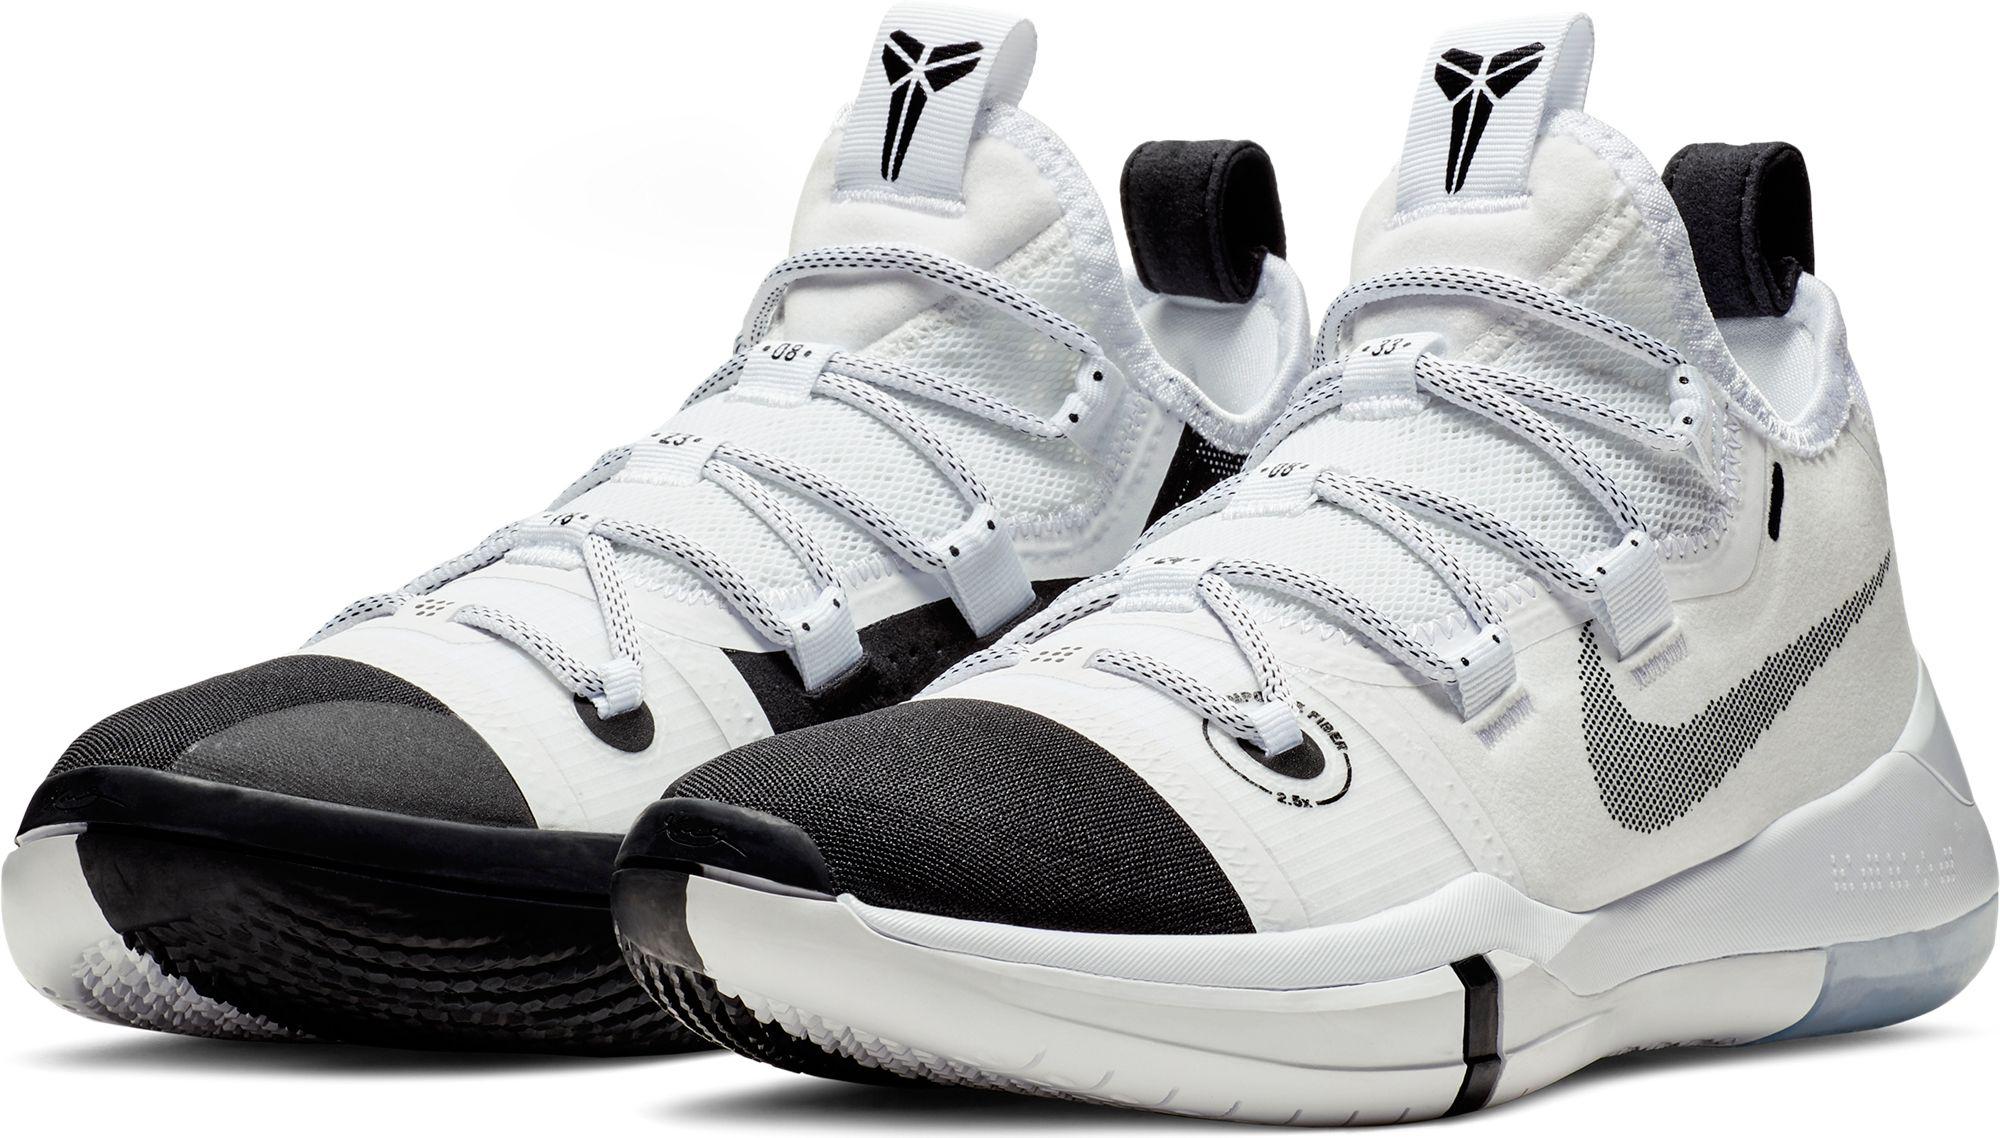 Nike Kobe A.d. Tb Basketball Shoes in White/Black (White) for Men - Lyst